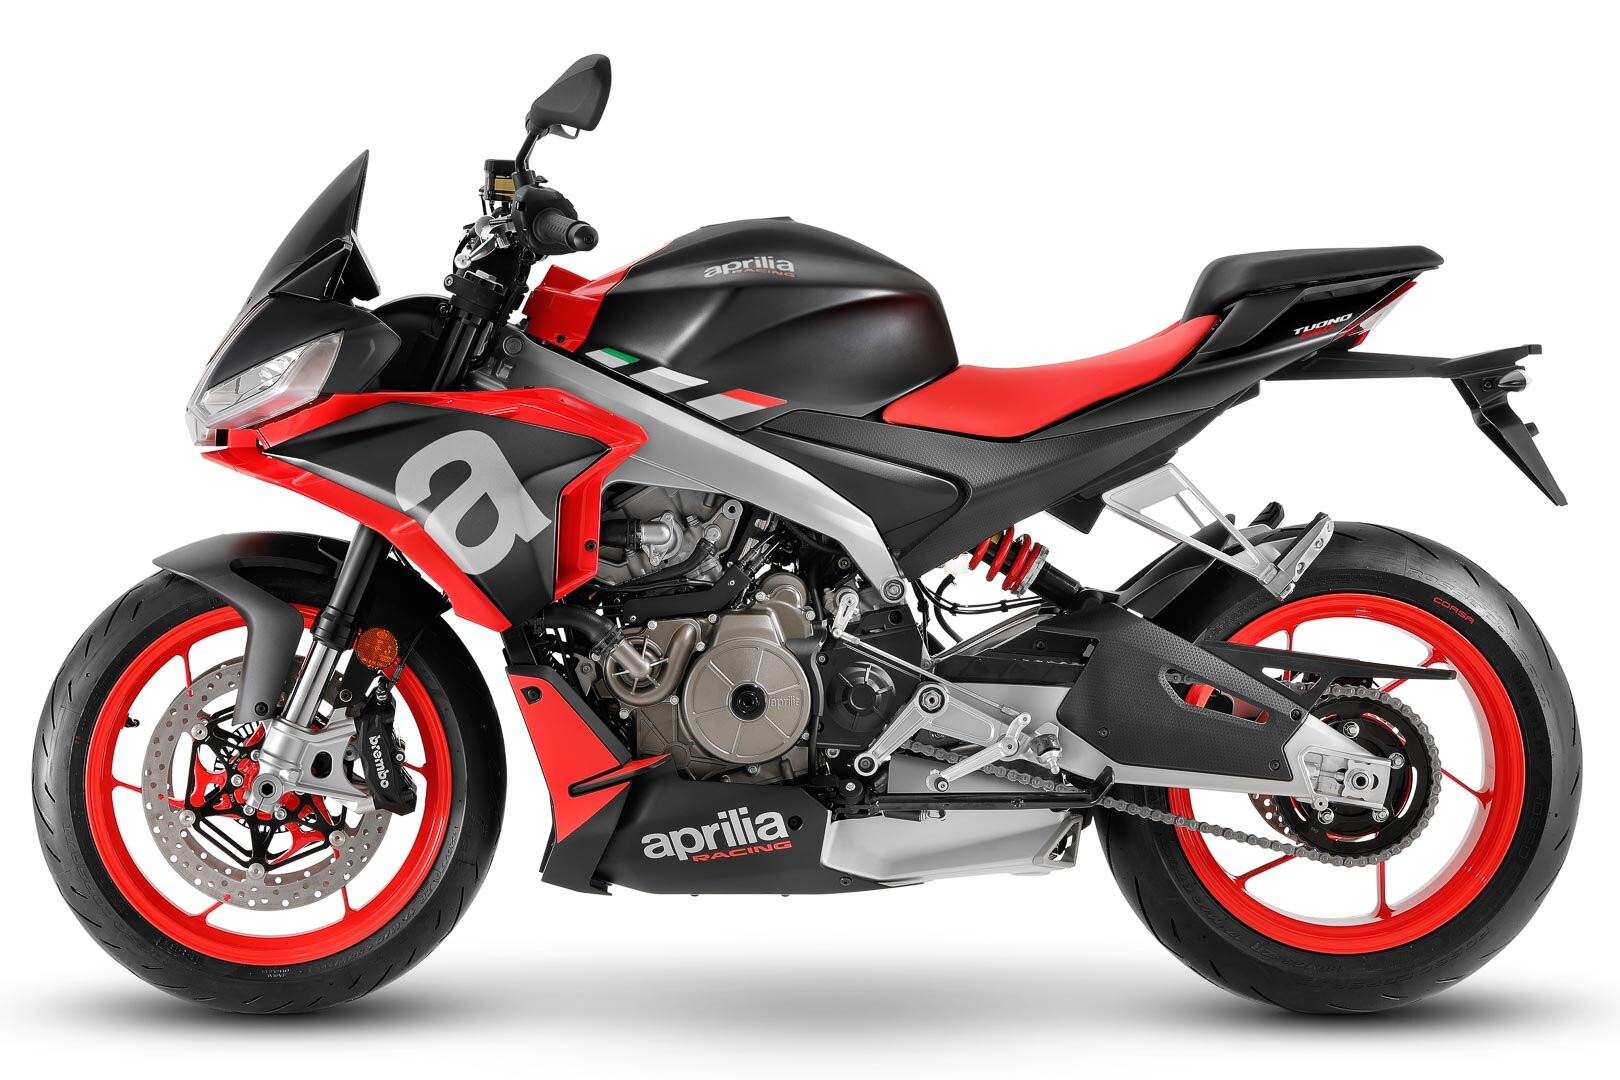 2021-Aprilia-Tuono-660-First-look-upright-sportbike-motorcycle-11.jpg